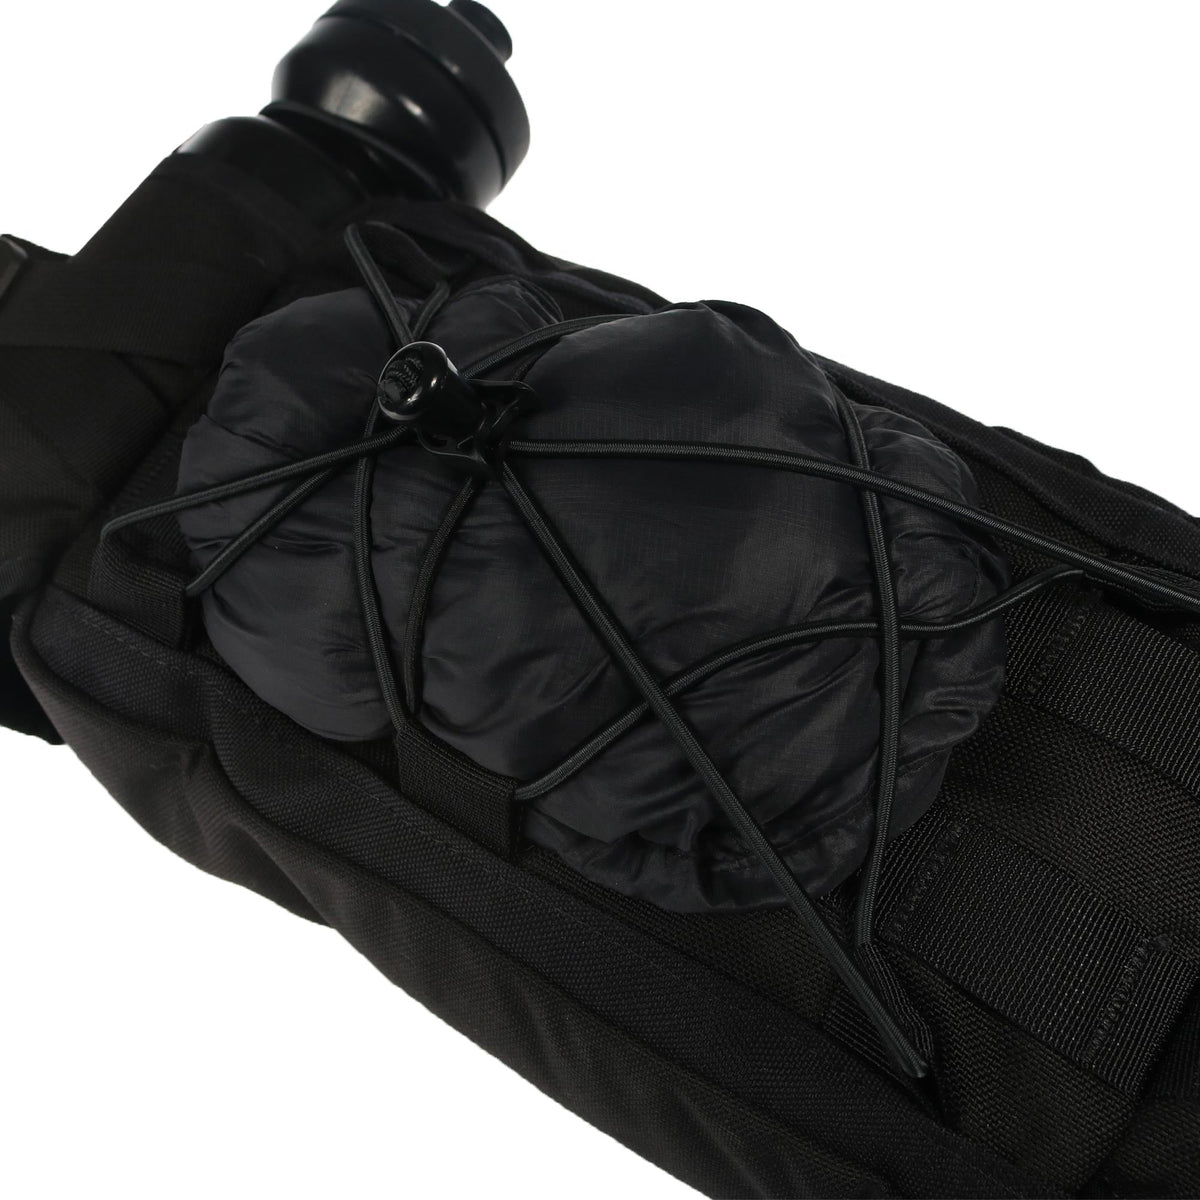 skingrowsback LOW LOADER Mixed Terrain Bum Bag Black made in australia